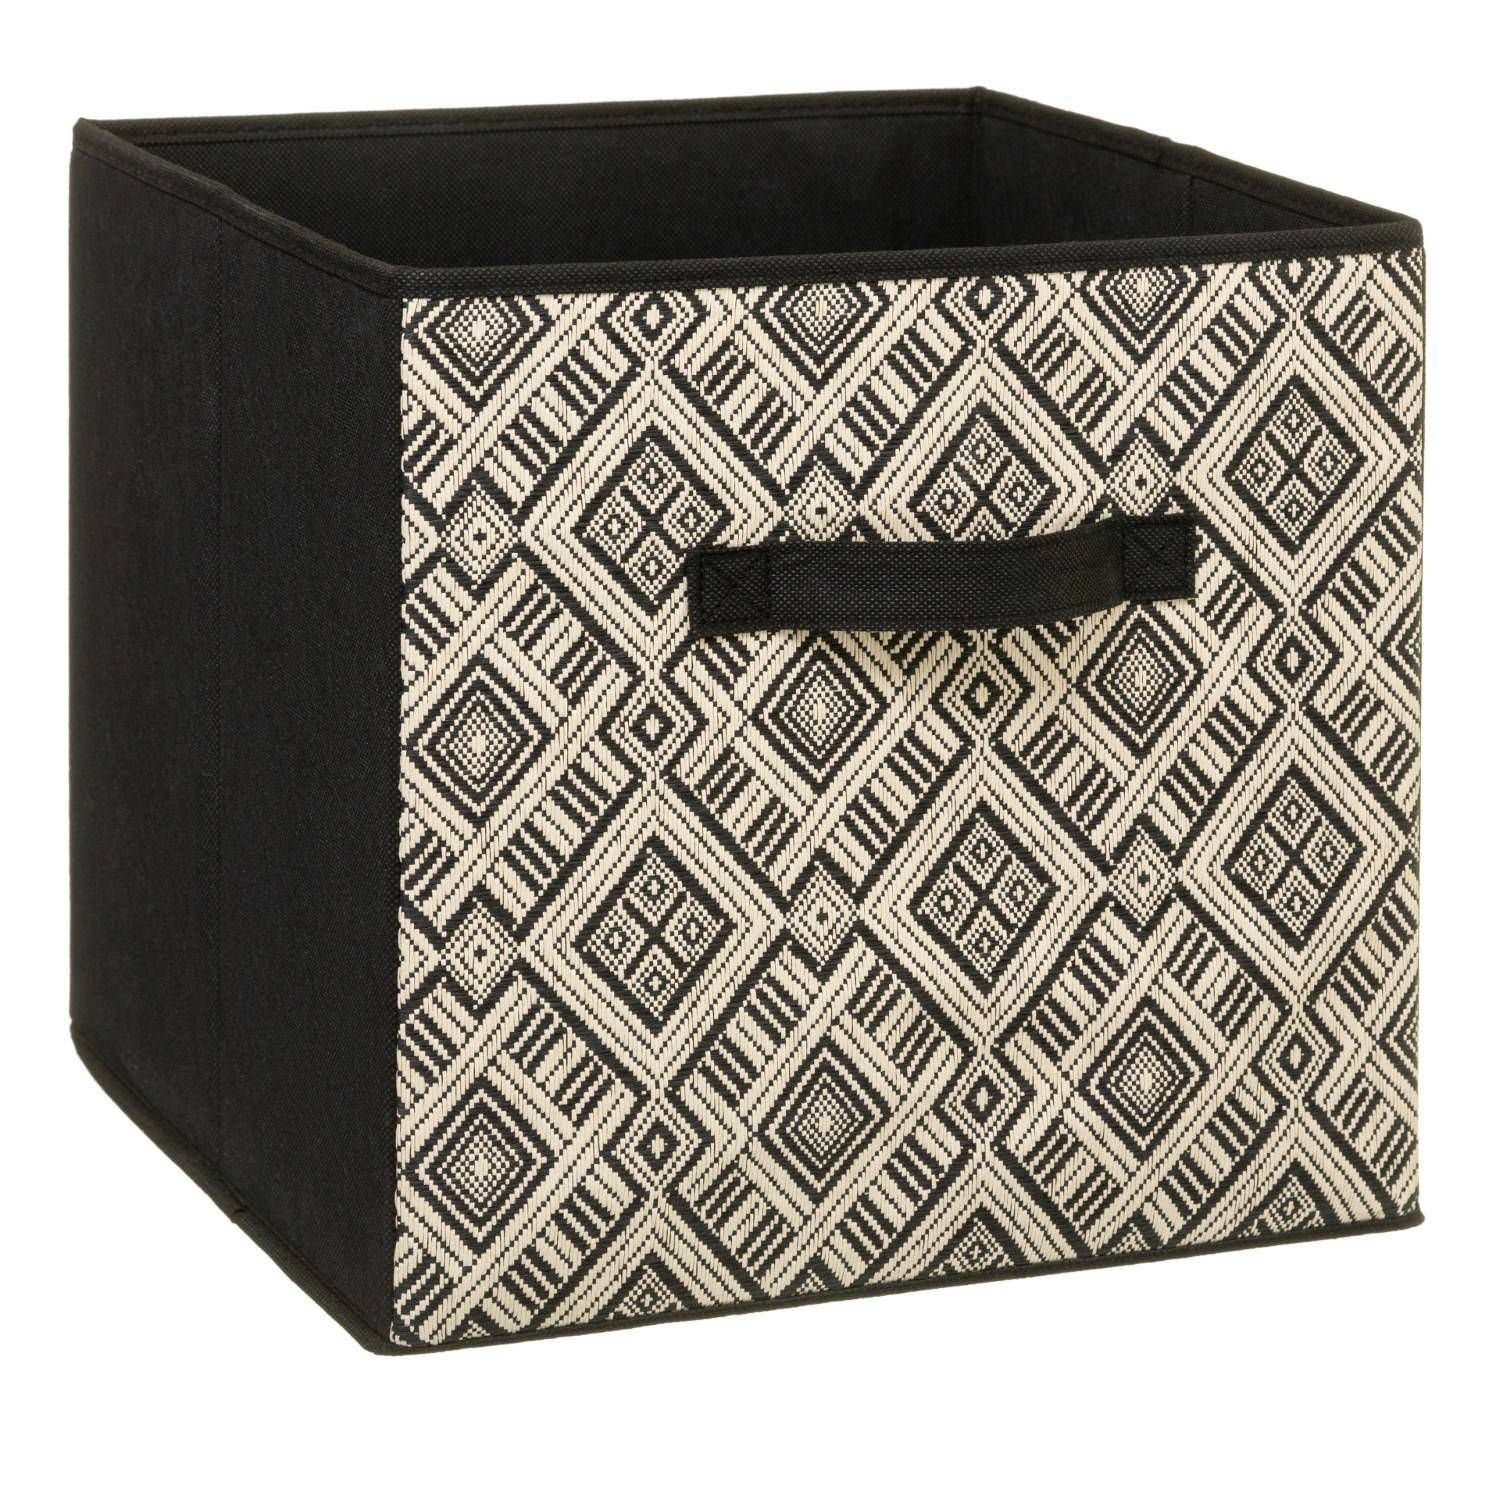 5five Simply Smart Úložný box, textilní ETHNIQUE, 31 x 31 x 31 cm - EDAXO.CZ s.r.o.